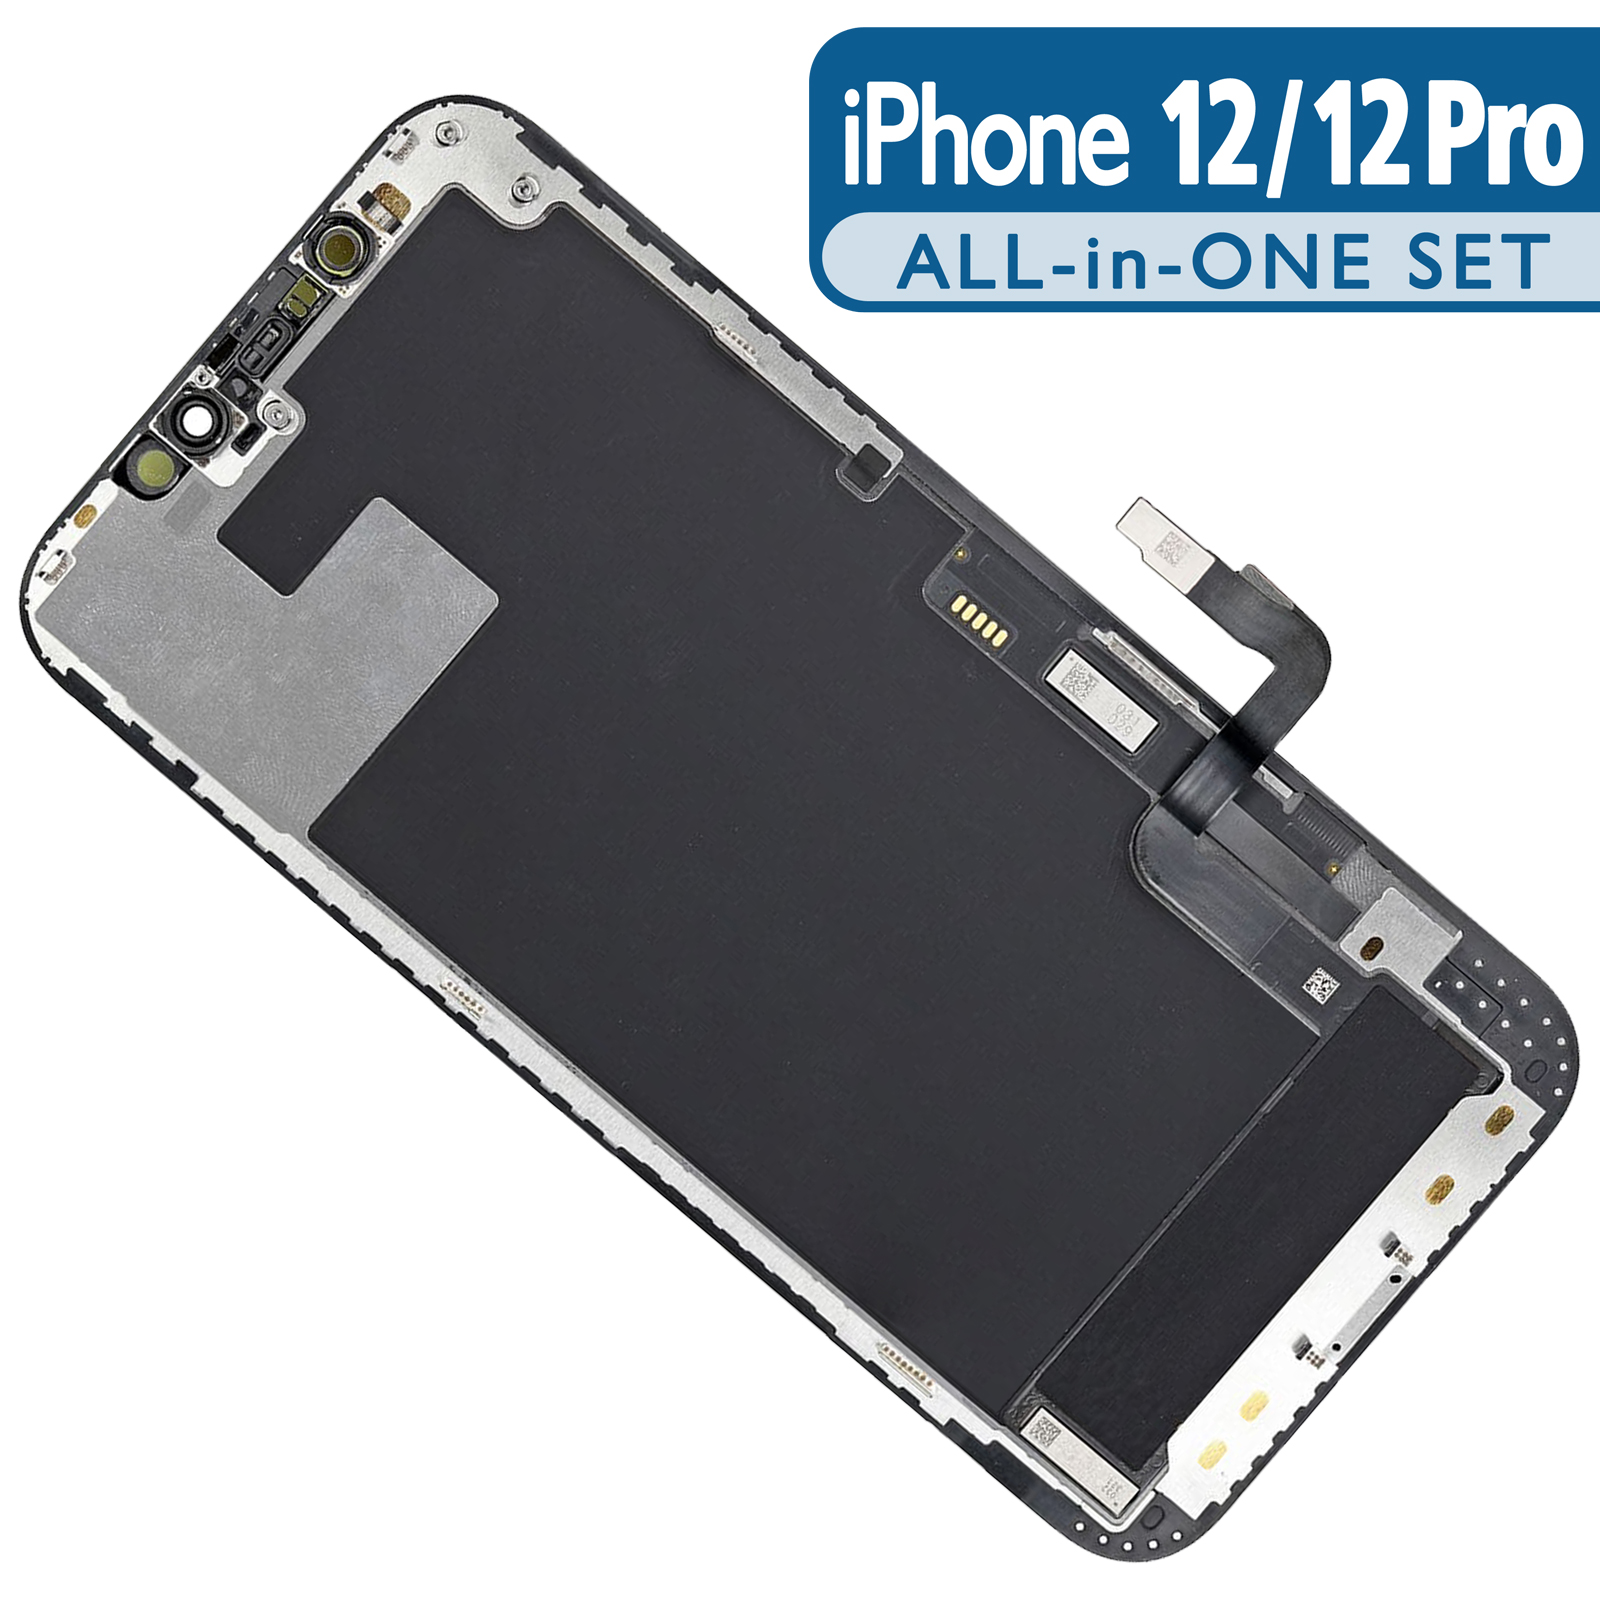 Display für iPhone 12 / iPhone 12 Pro in PROFESSIONAL-Qualität